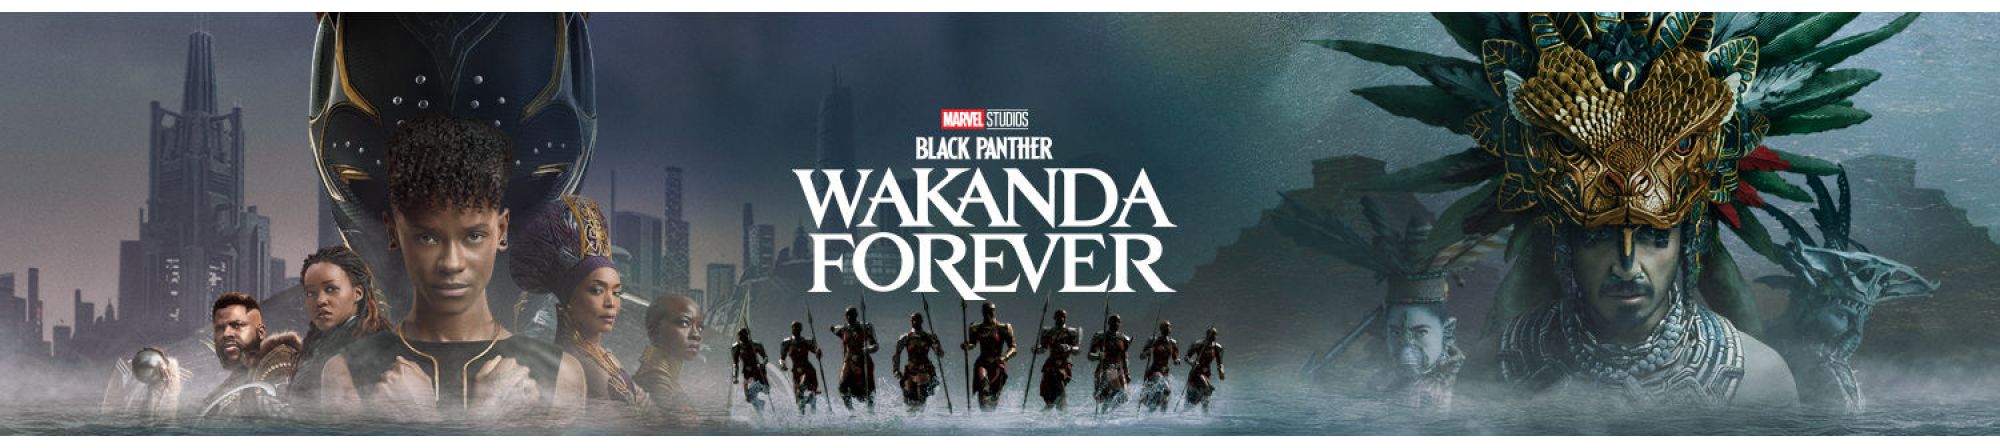 BLACK PANTHER Wakanda Forever (Banner Superior)